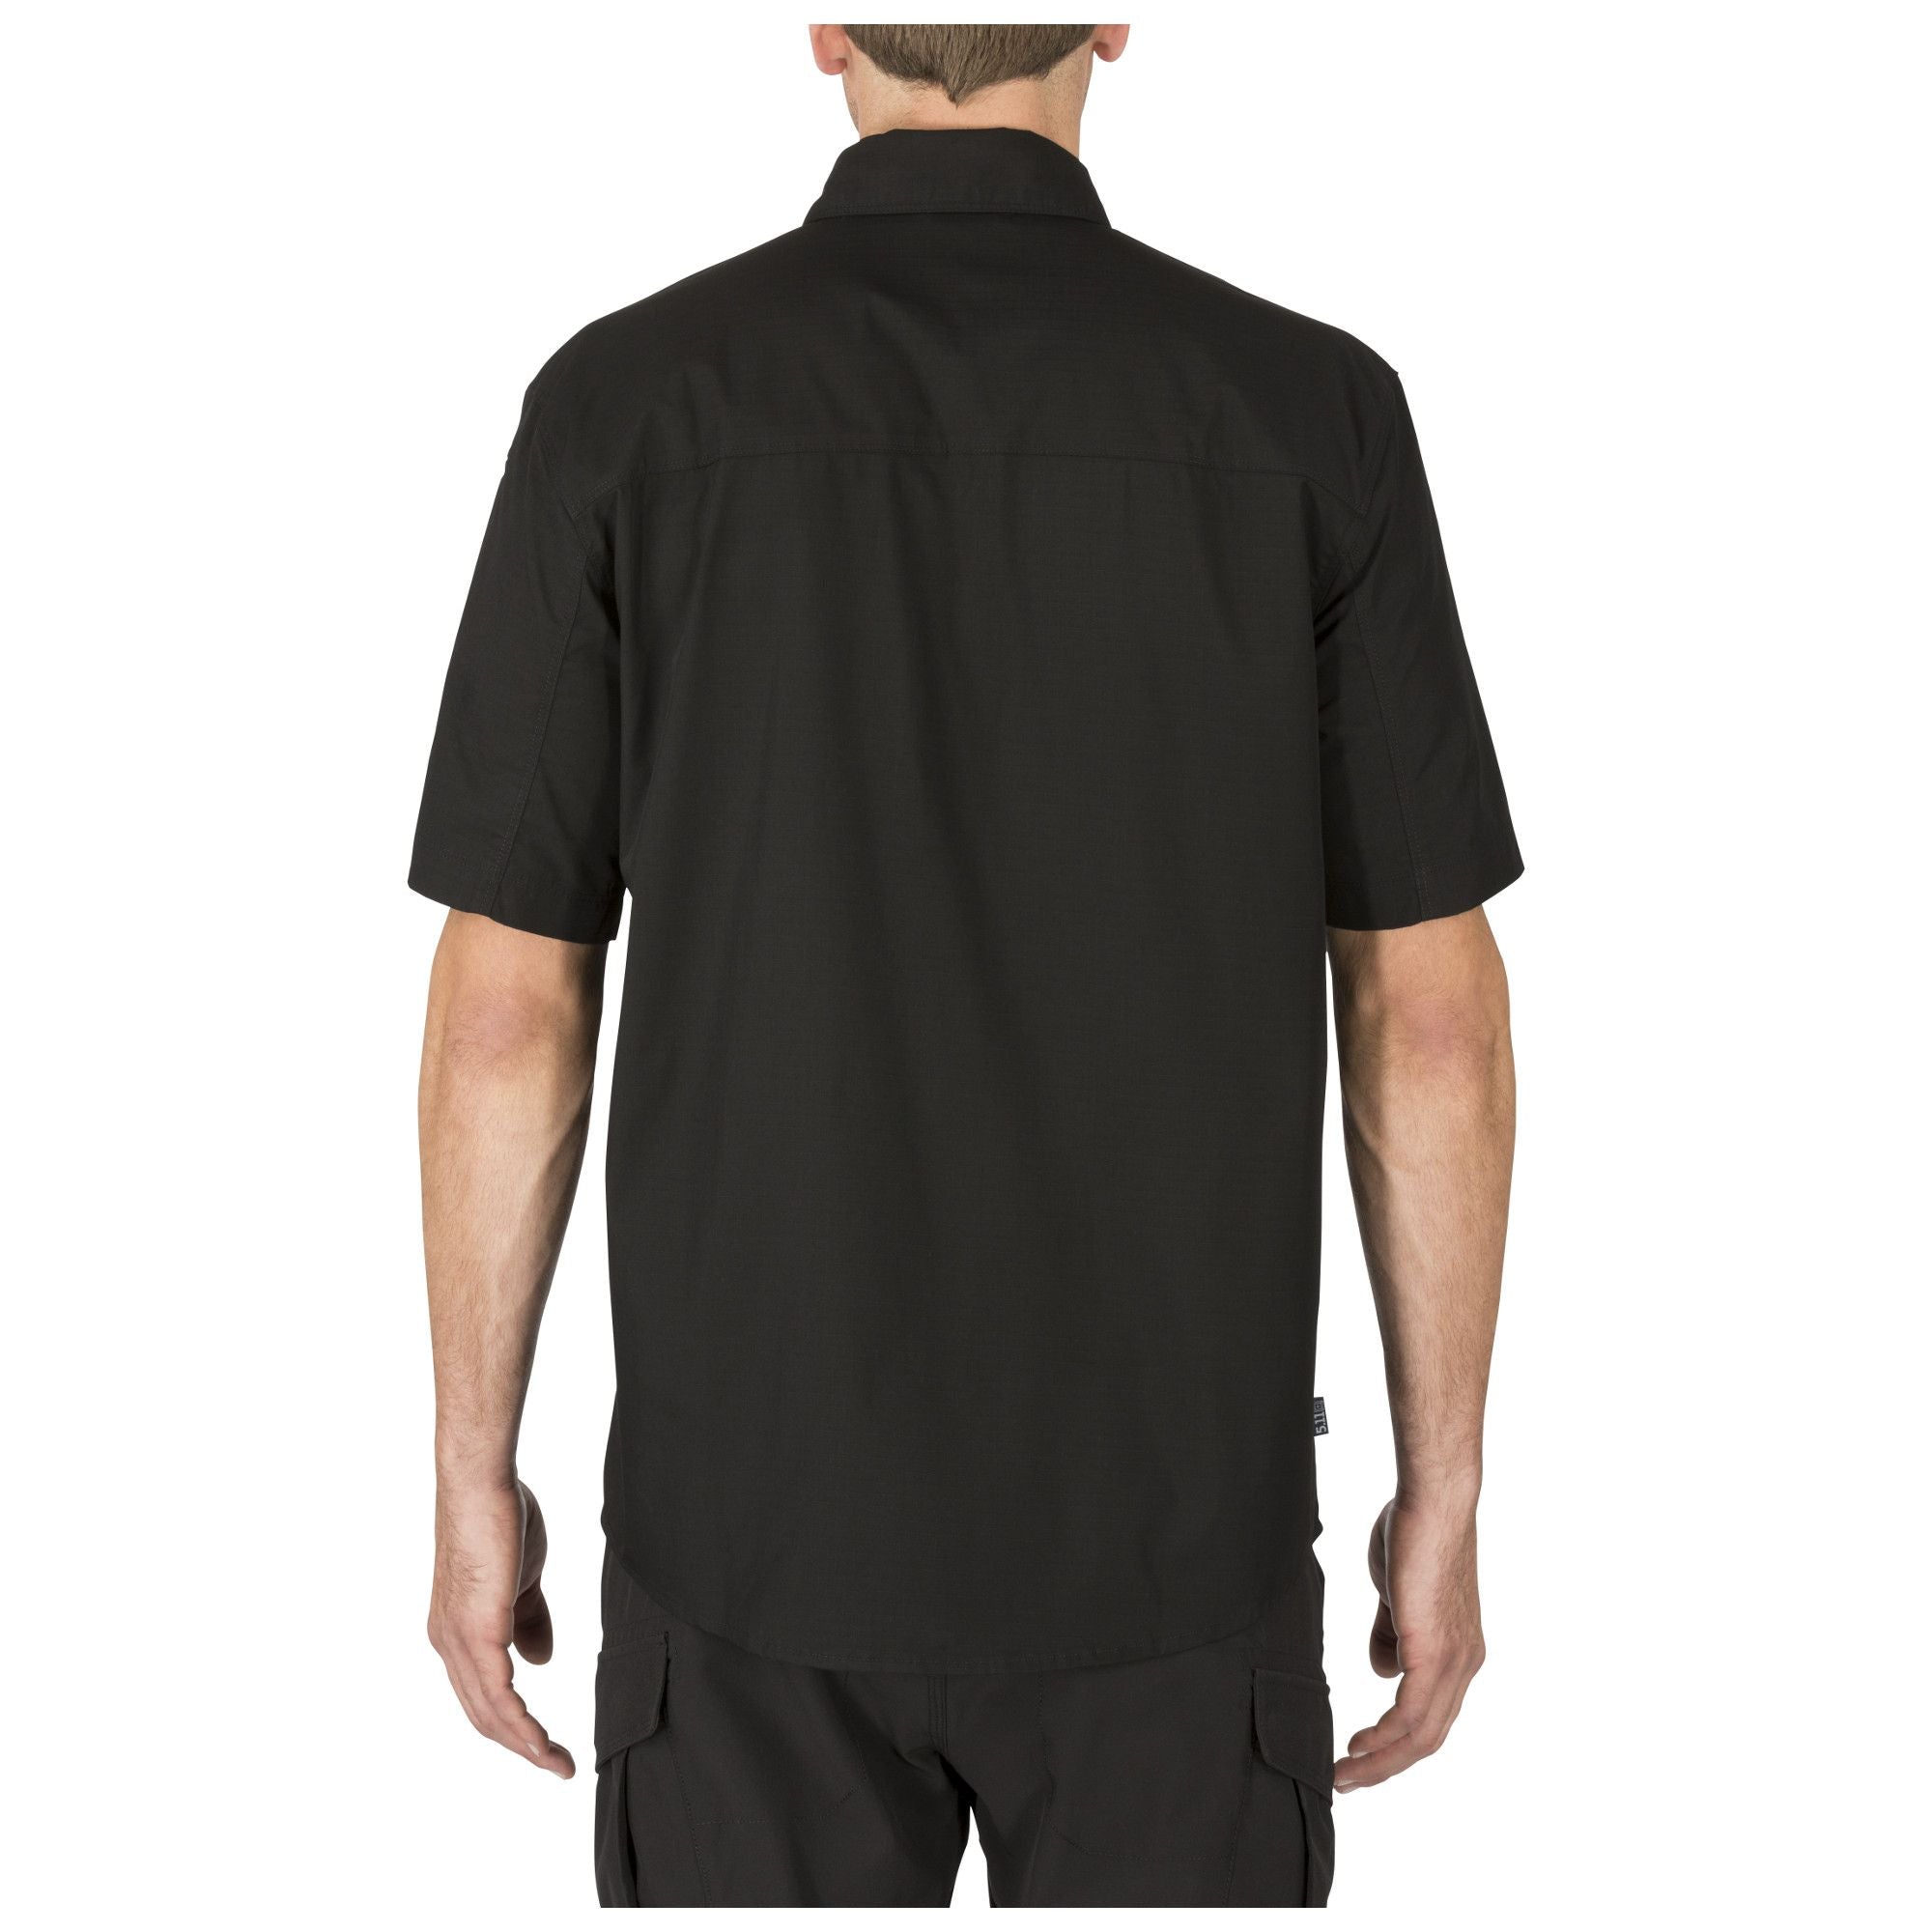 5.11 Tactical Stryke Short Sleeve Shirts Black Shirts 5.11 Tactical Small Tactical Gear Supplier Tactical Distributors Australia